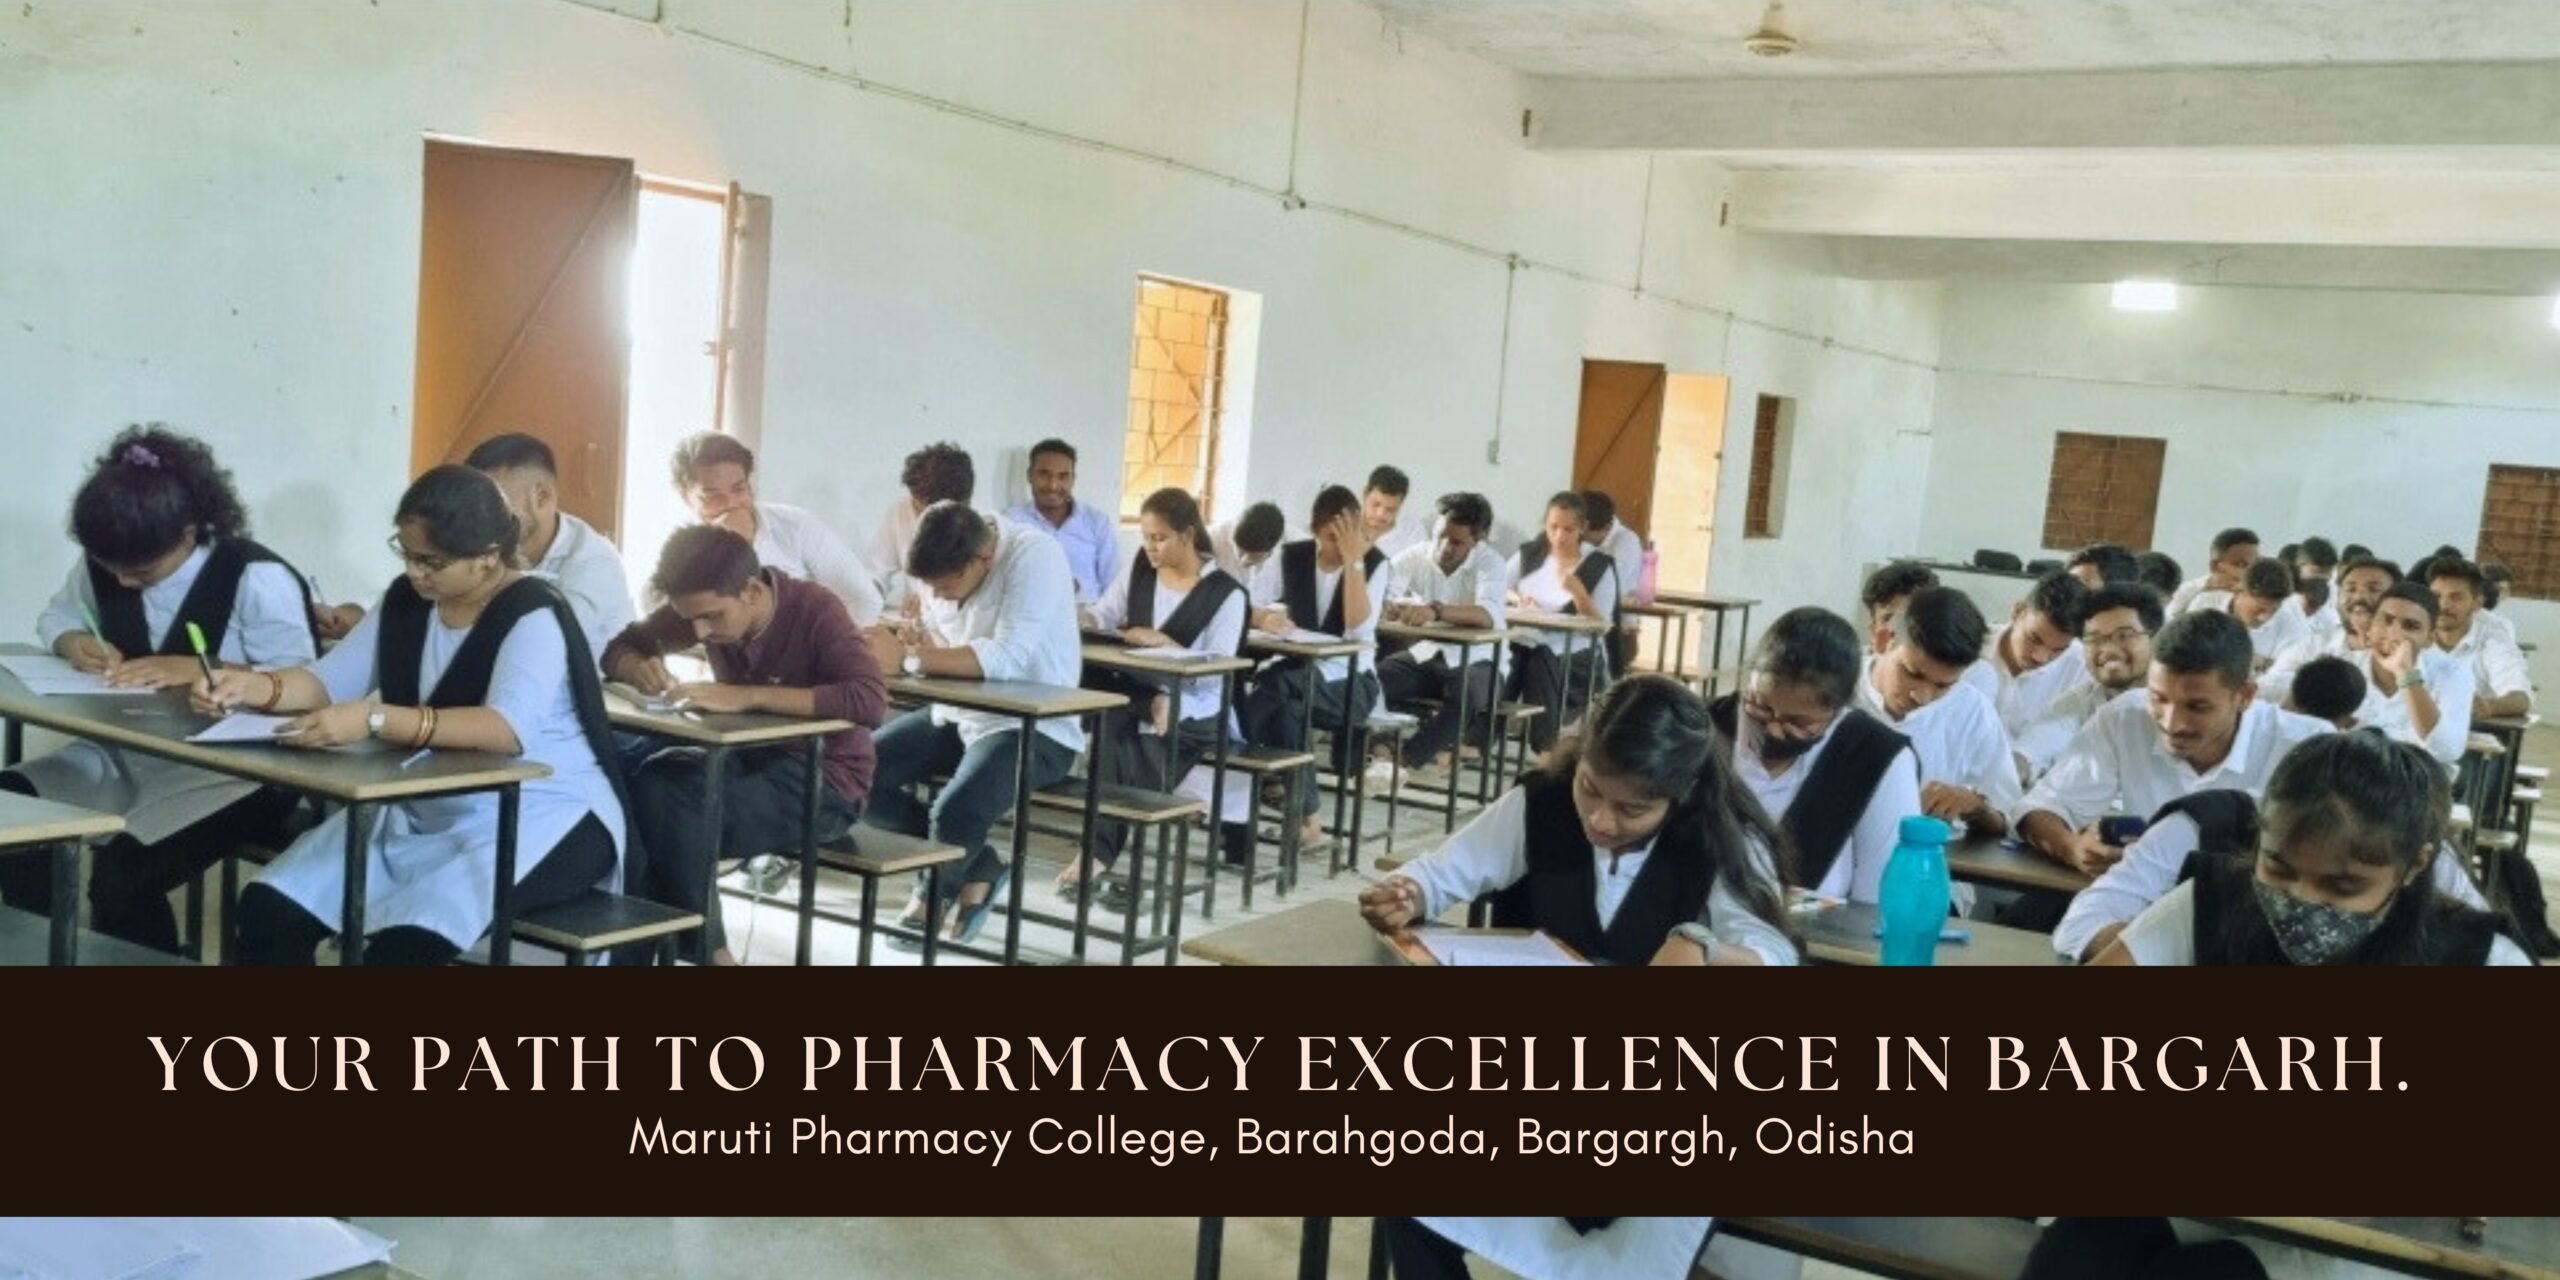 maruti-pharmacy-college-bargarh-image-01